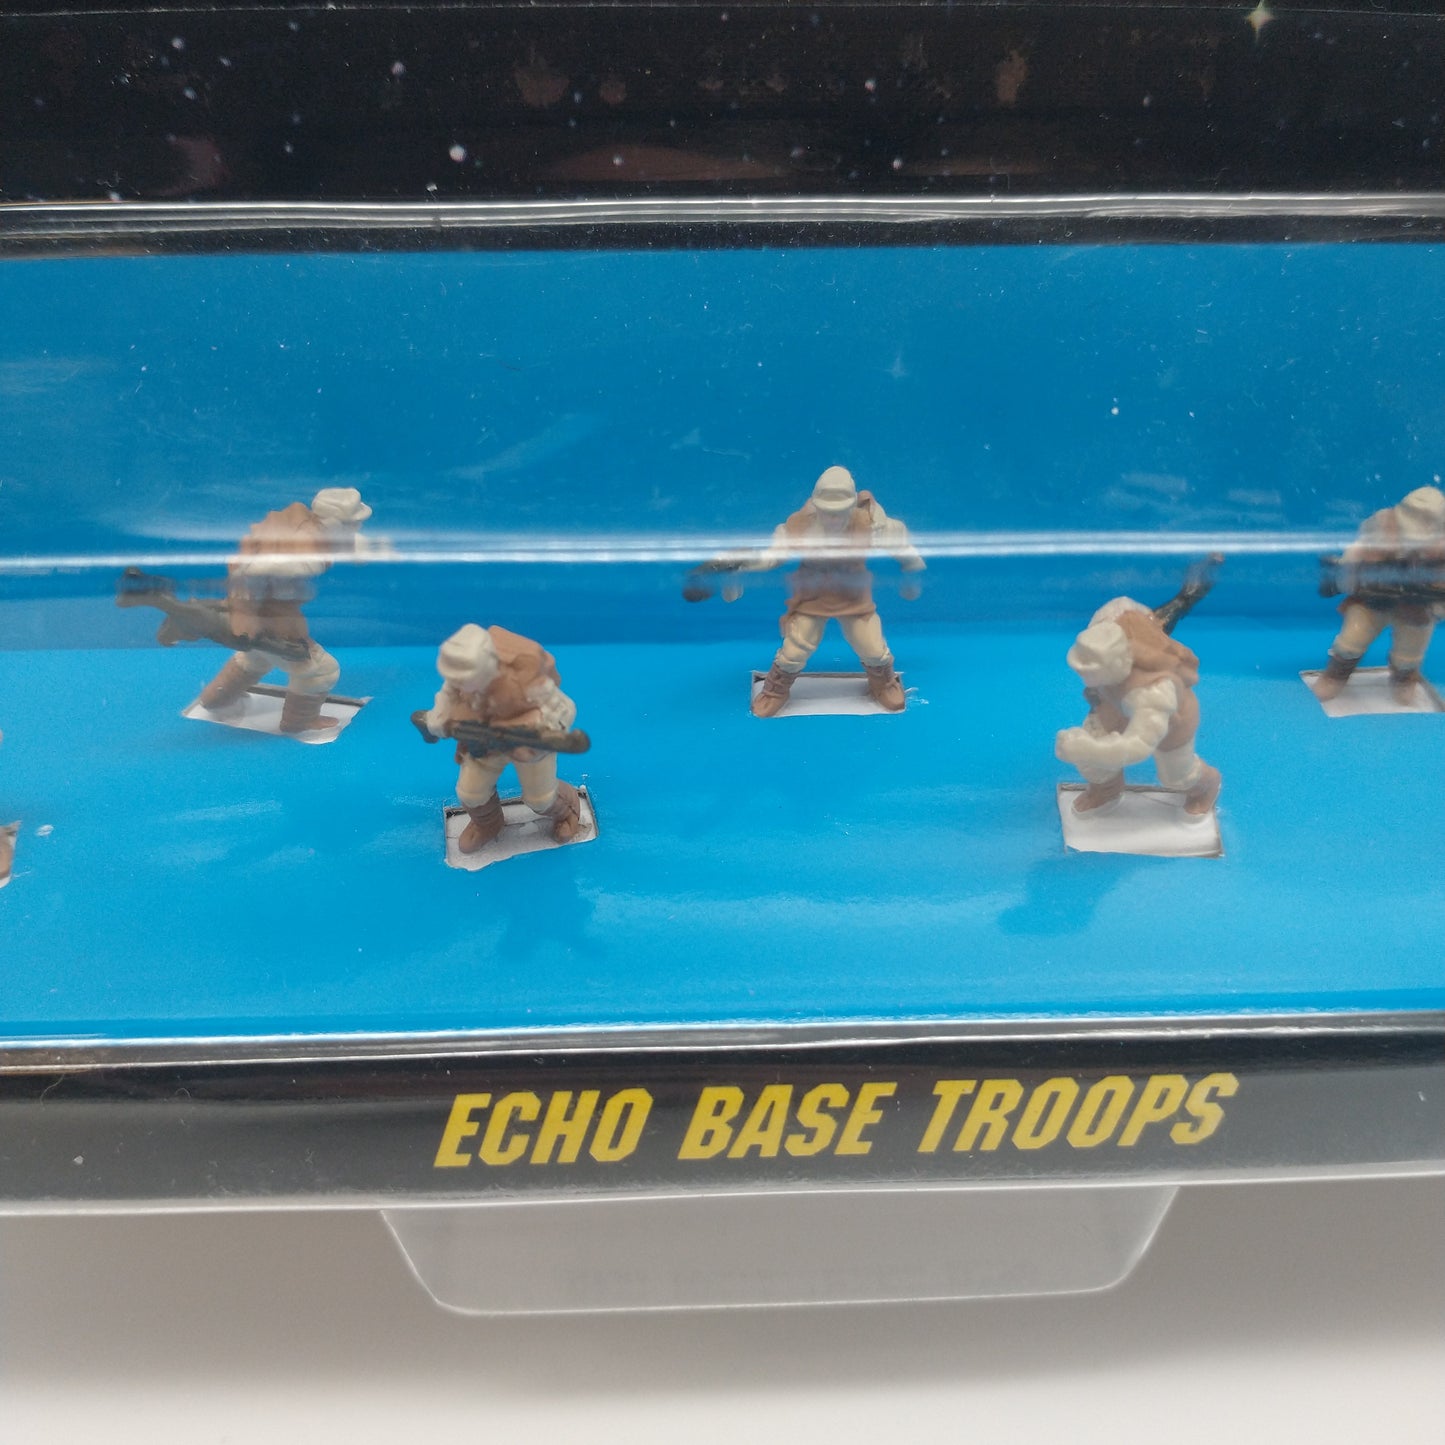 Star Wars Micro Machines Echo Base Troopers Galoob 1995